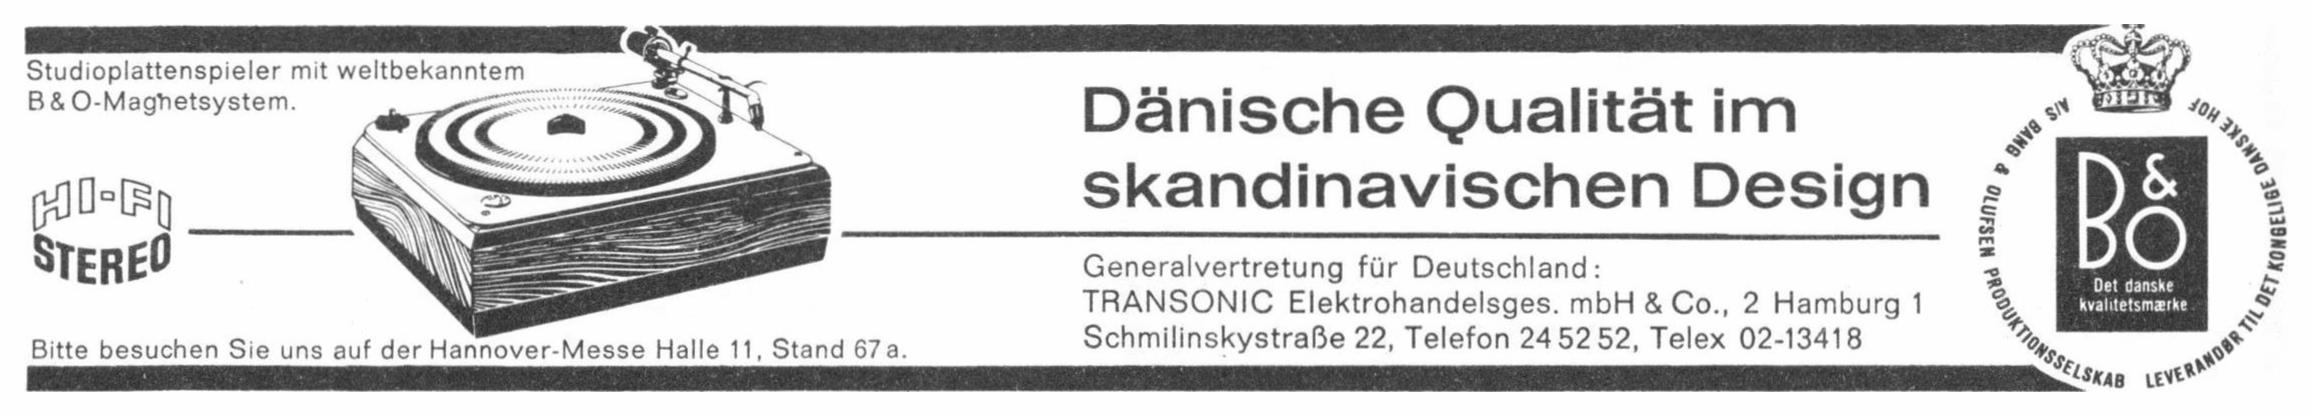 Bang & Olufsen 1964 5.jpg